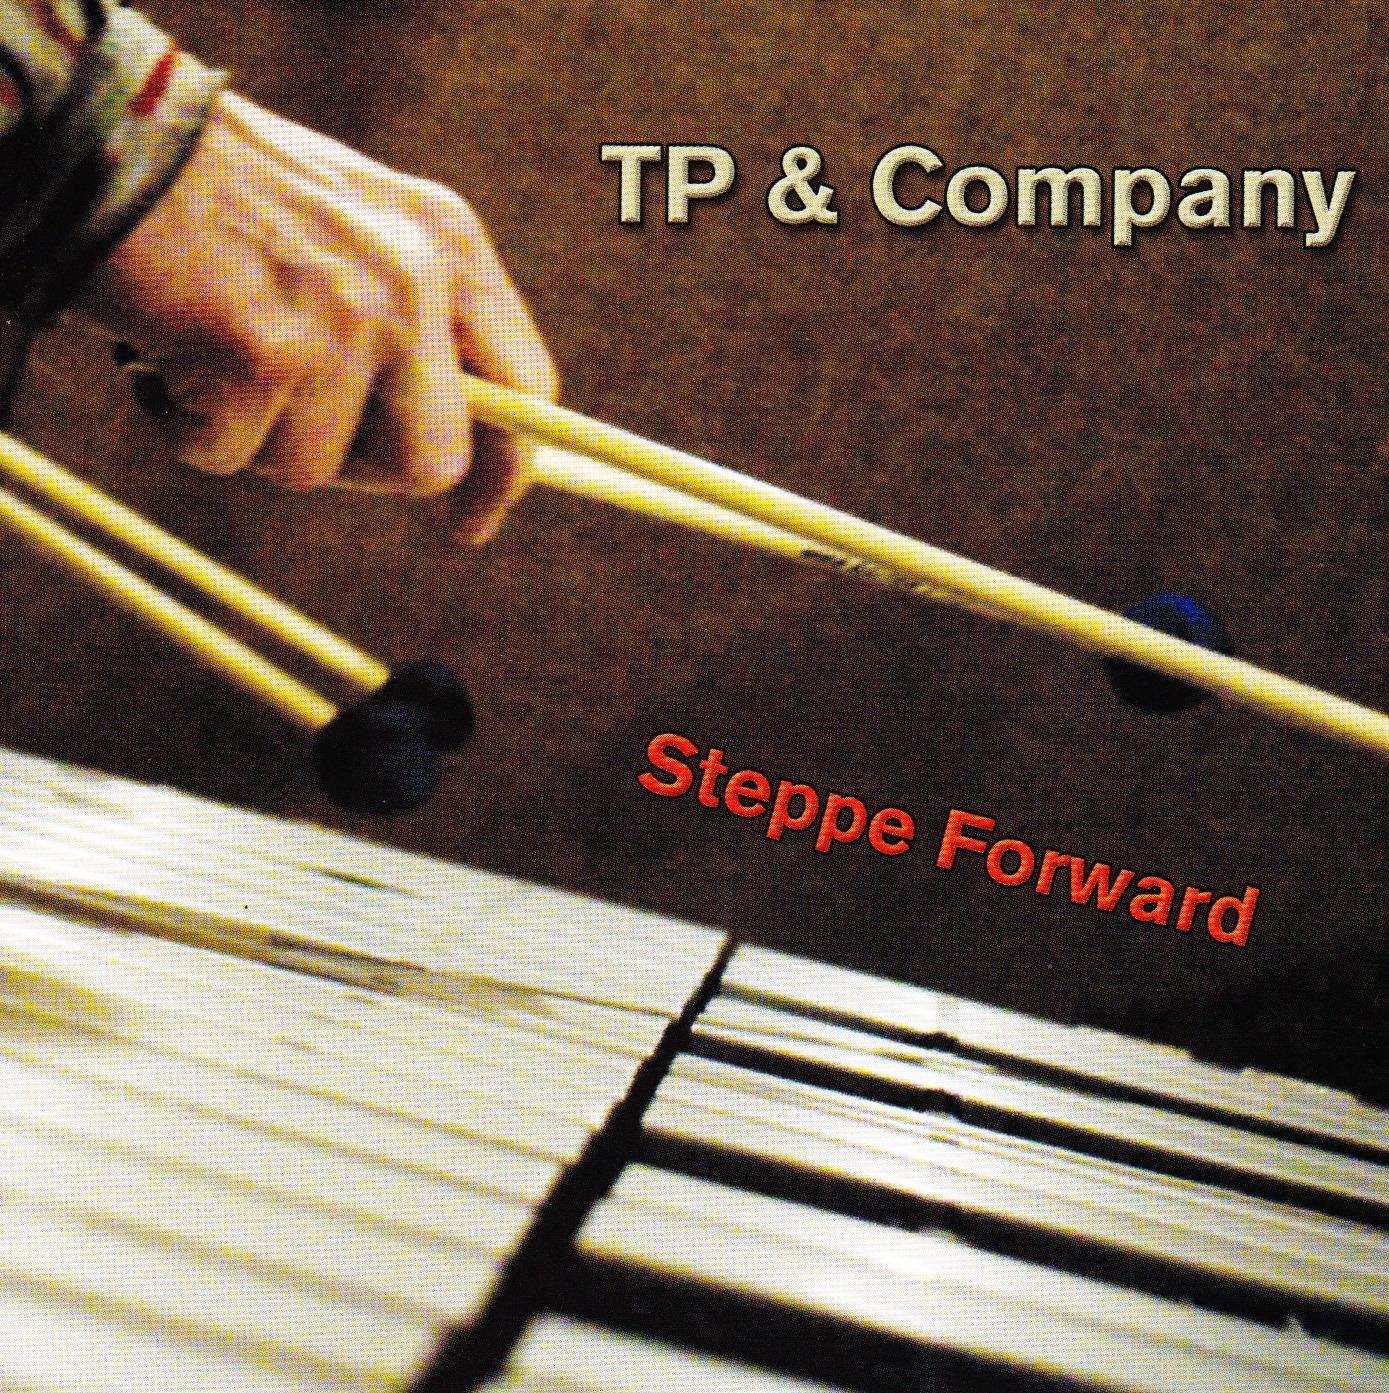 TP & Company: Steppe Forward